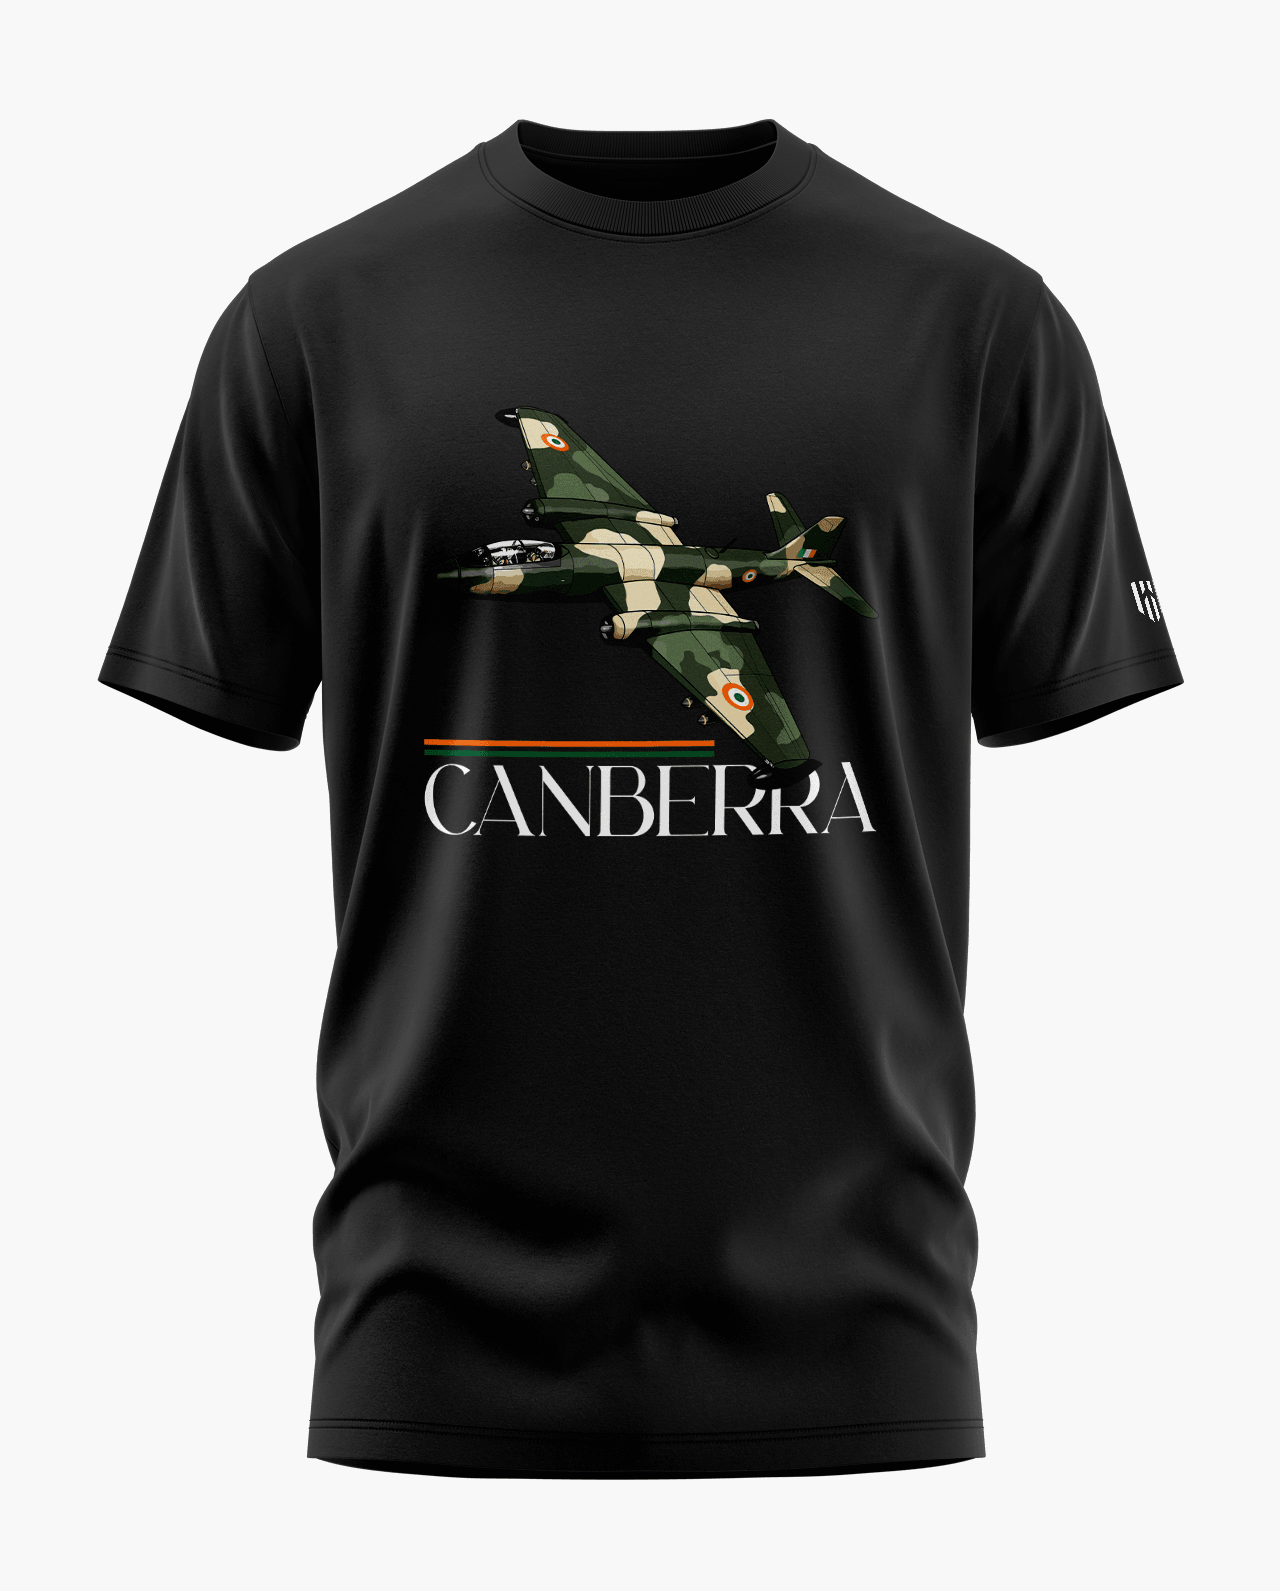 Canberra T-Shirt - Aero Armour